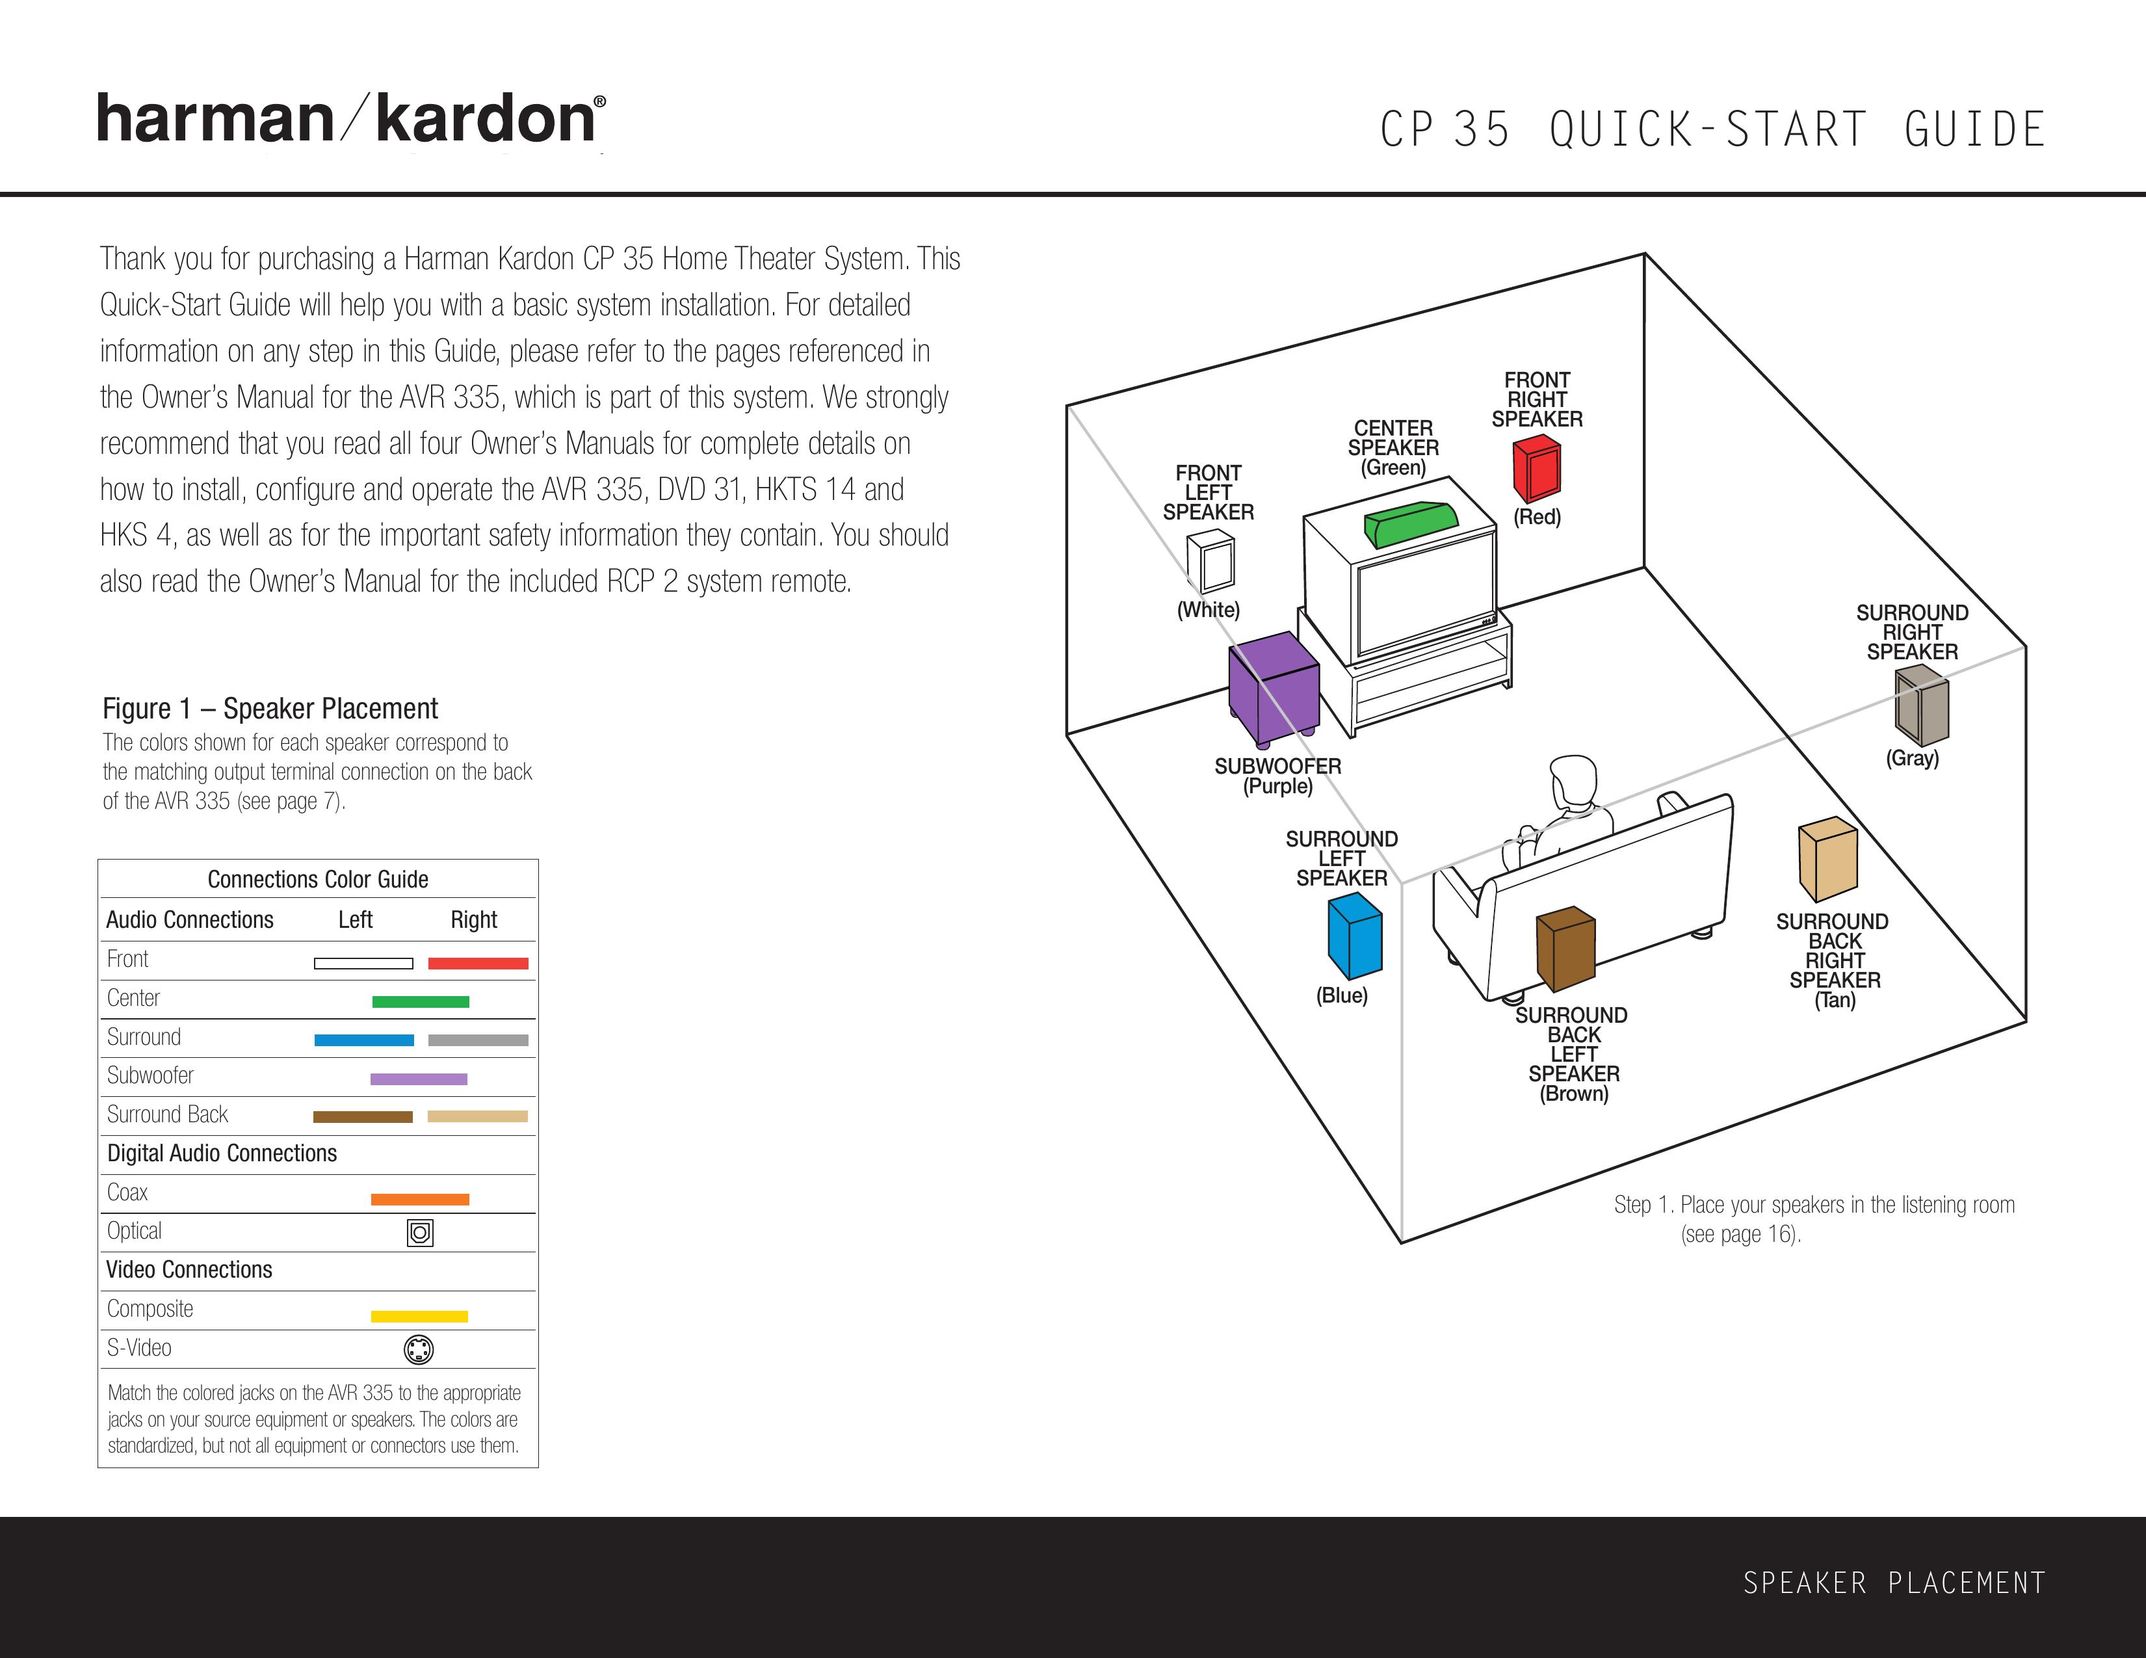 Harman-Kardon HKTS 14 Home Theater System User Manual